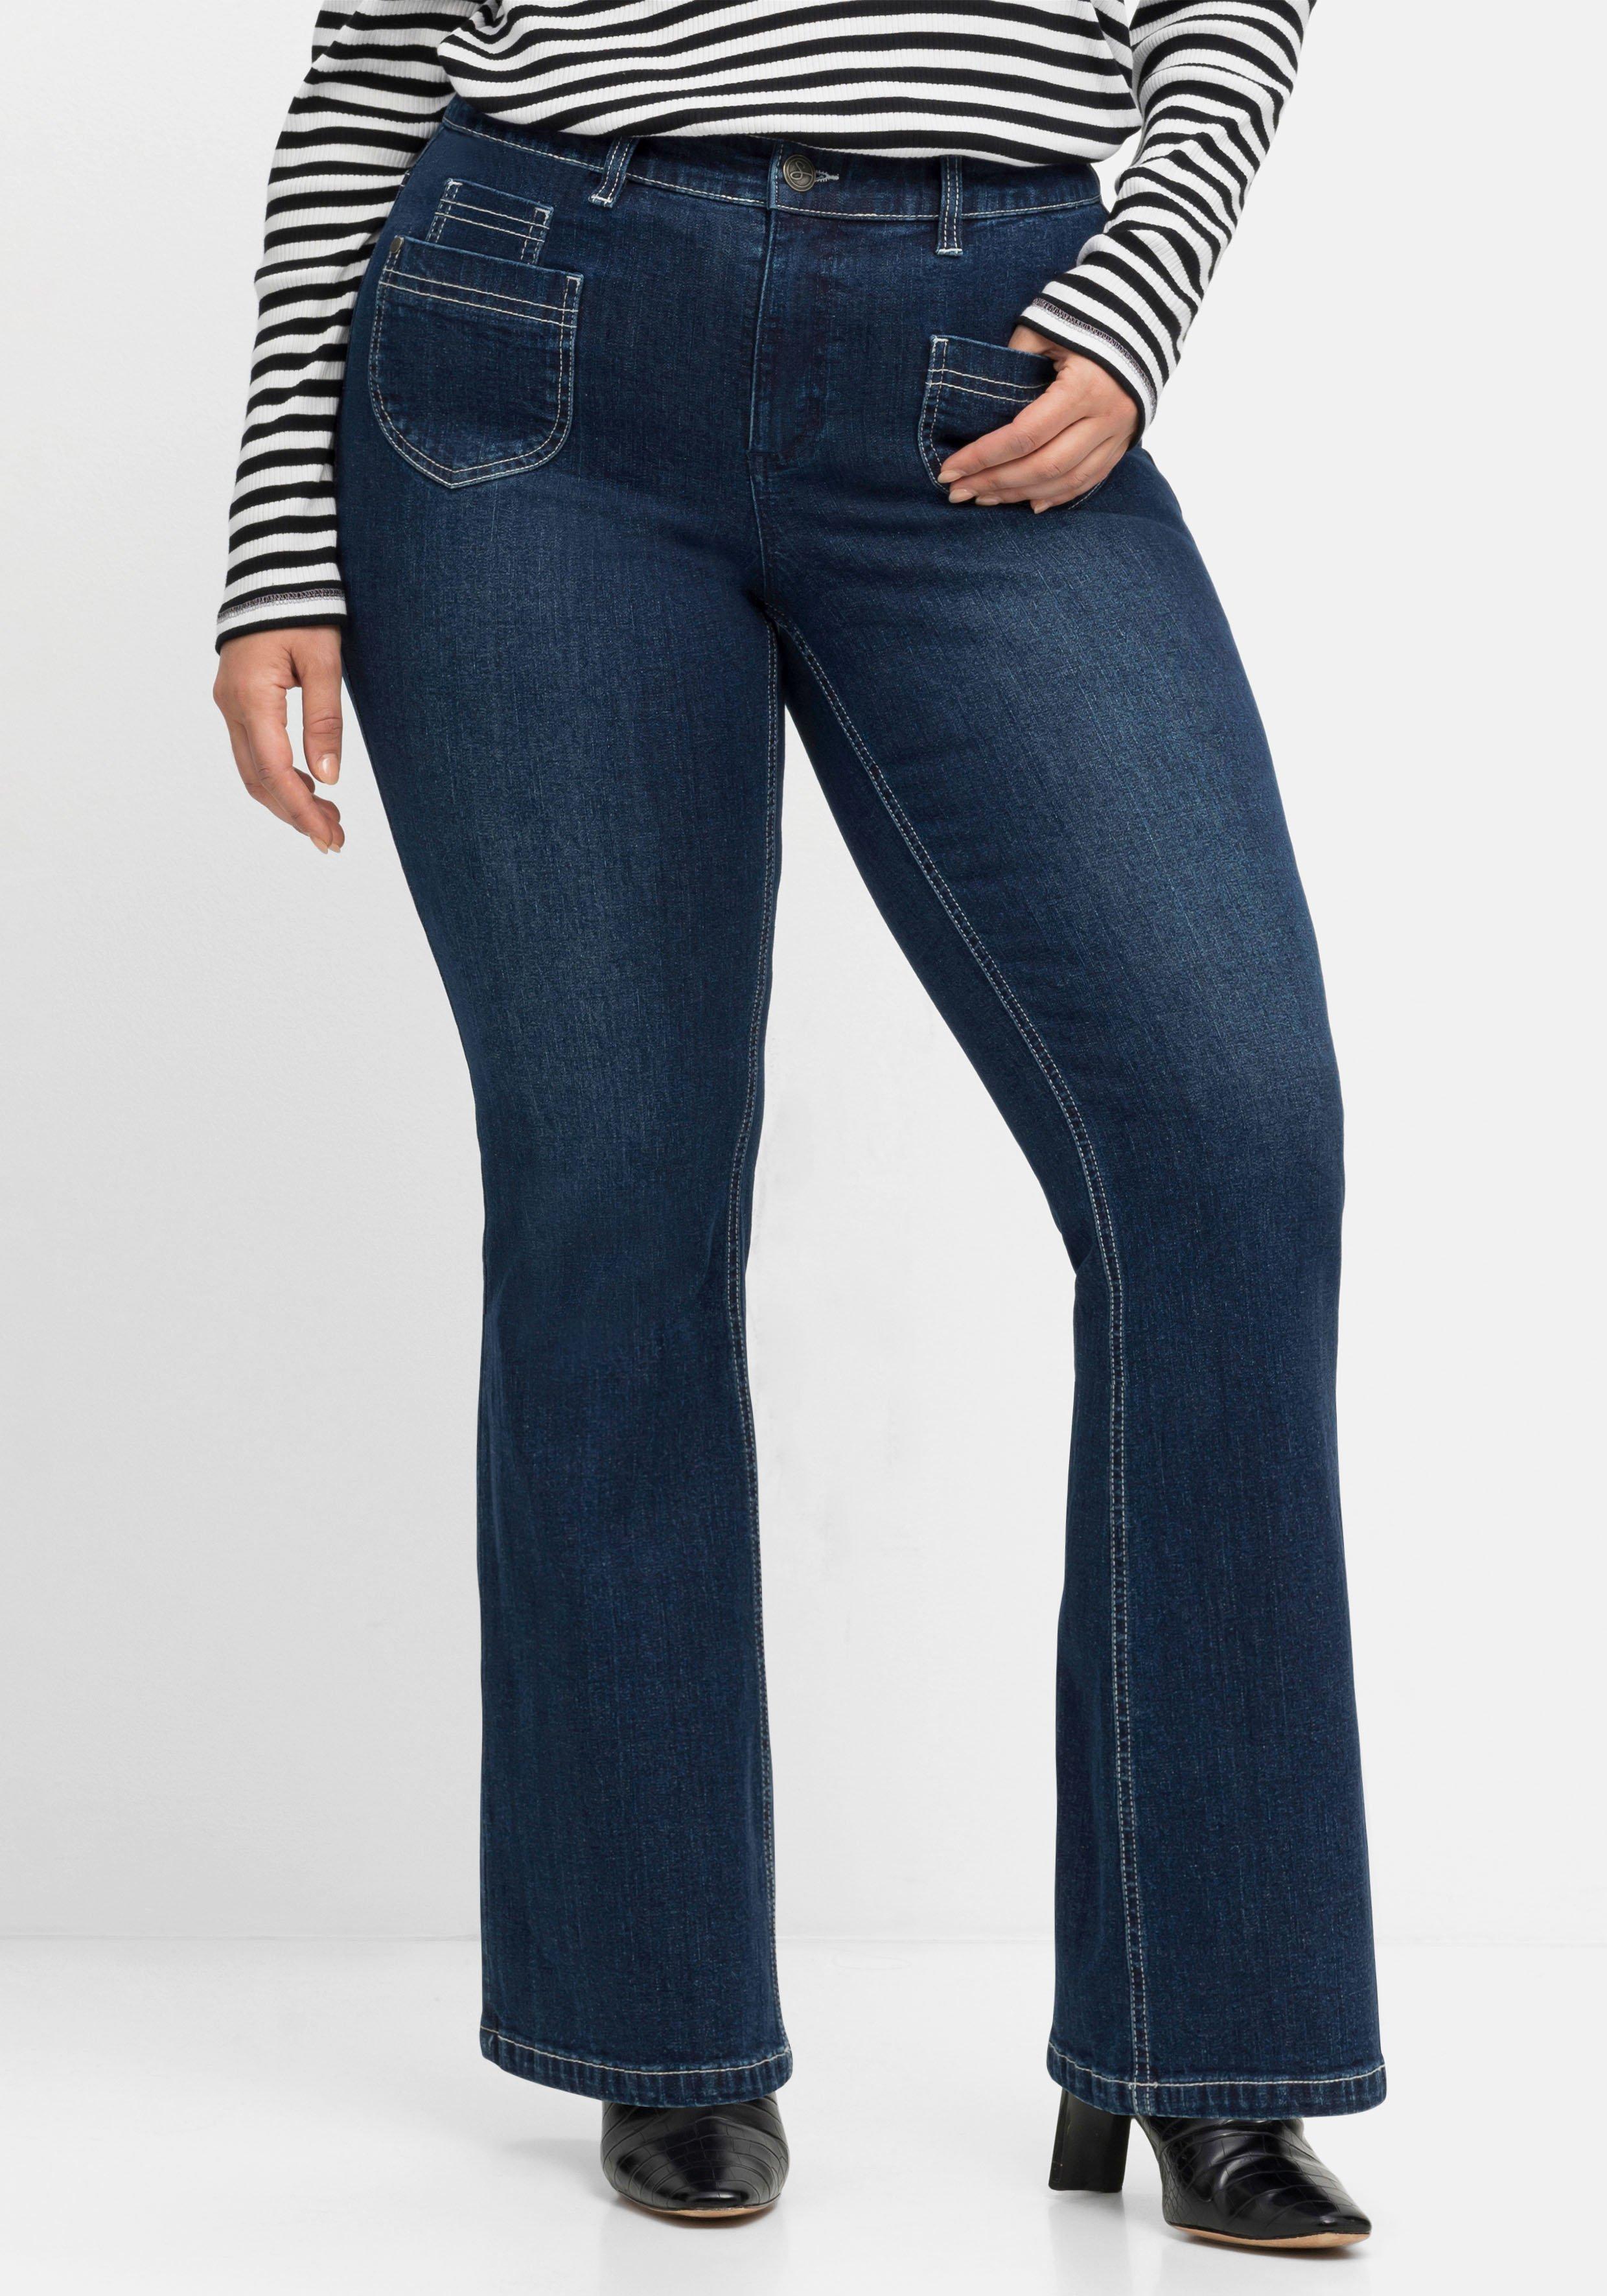 Bootcut-Jeans in High-Heel-Länge, mit Kontrastnähten - dark blue Denim |  sheego | Loose Fit Jeans